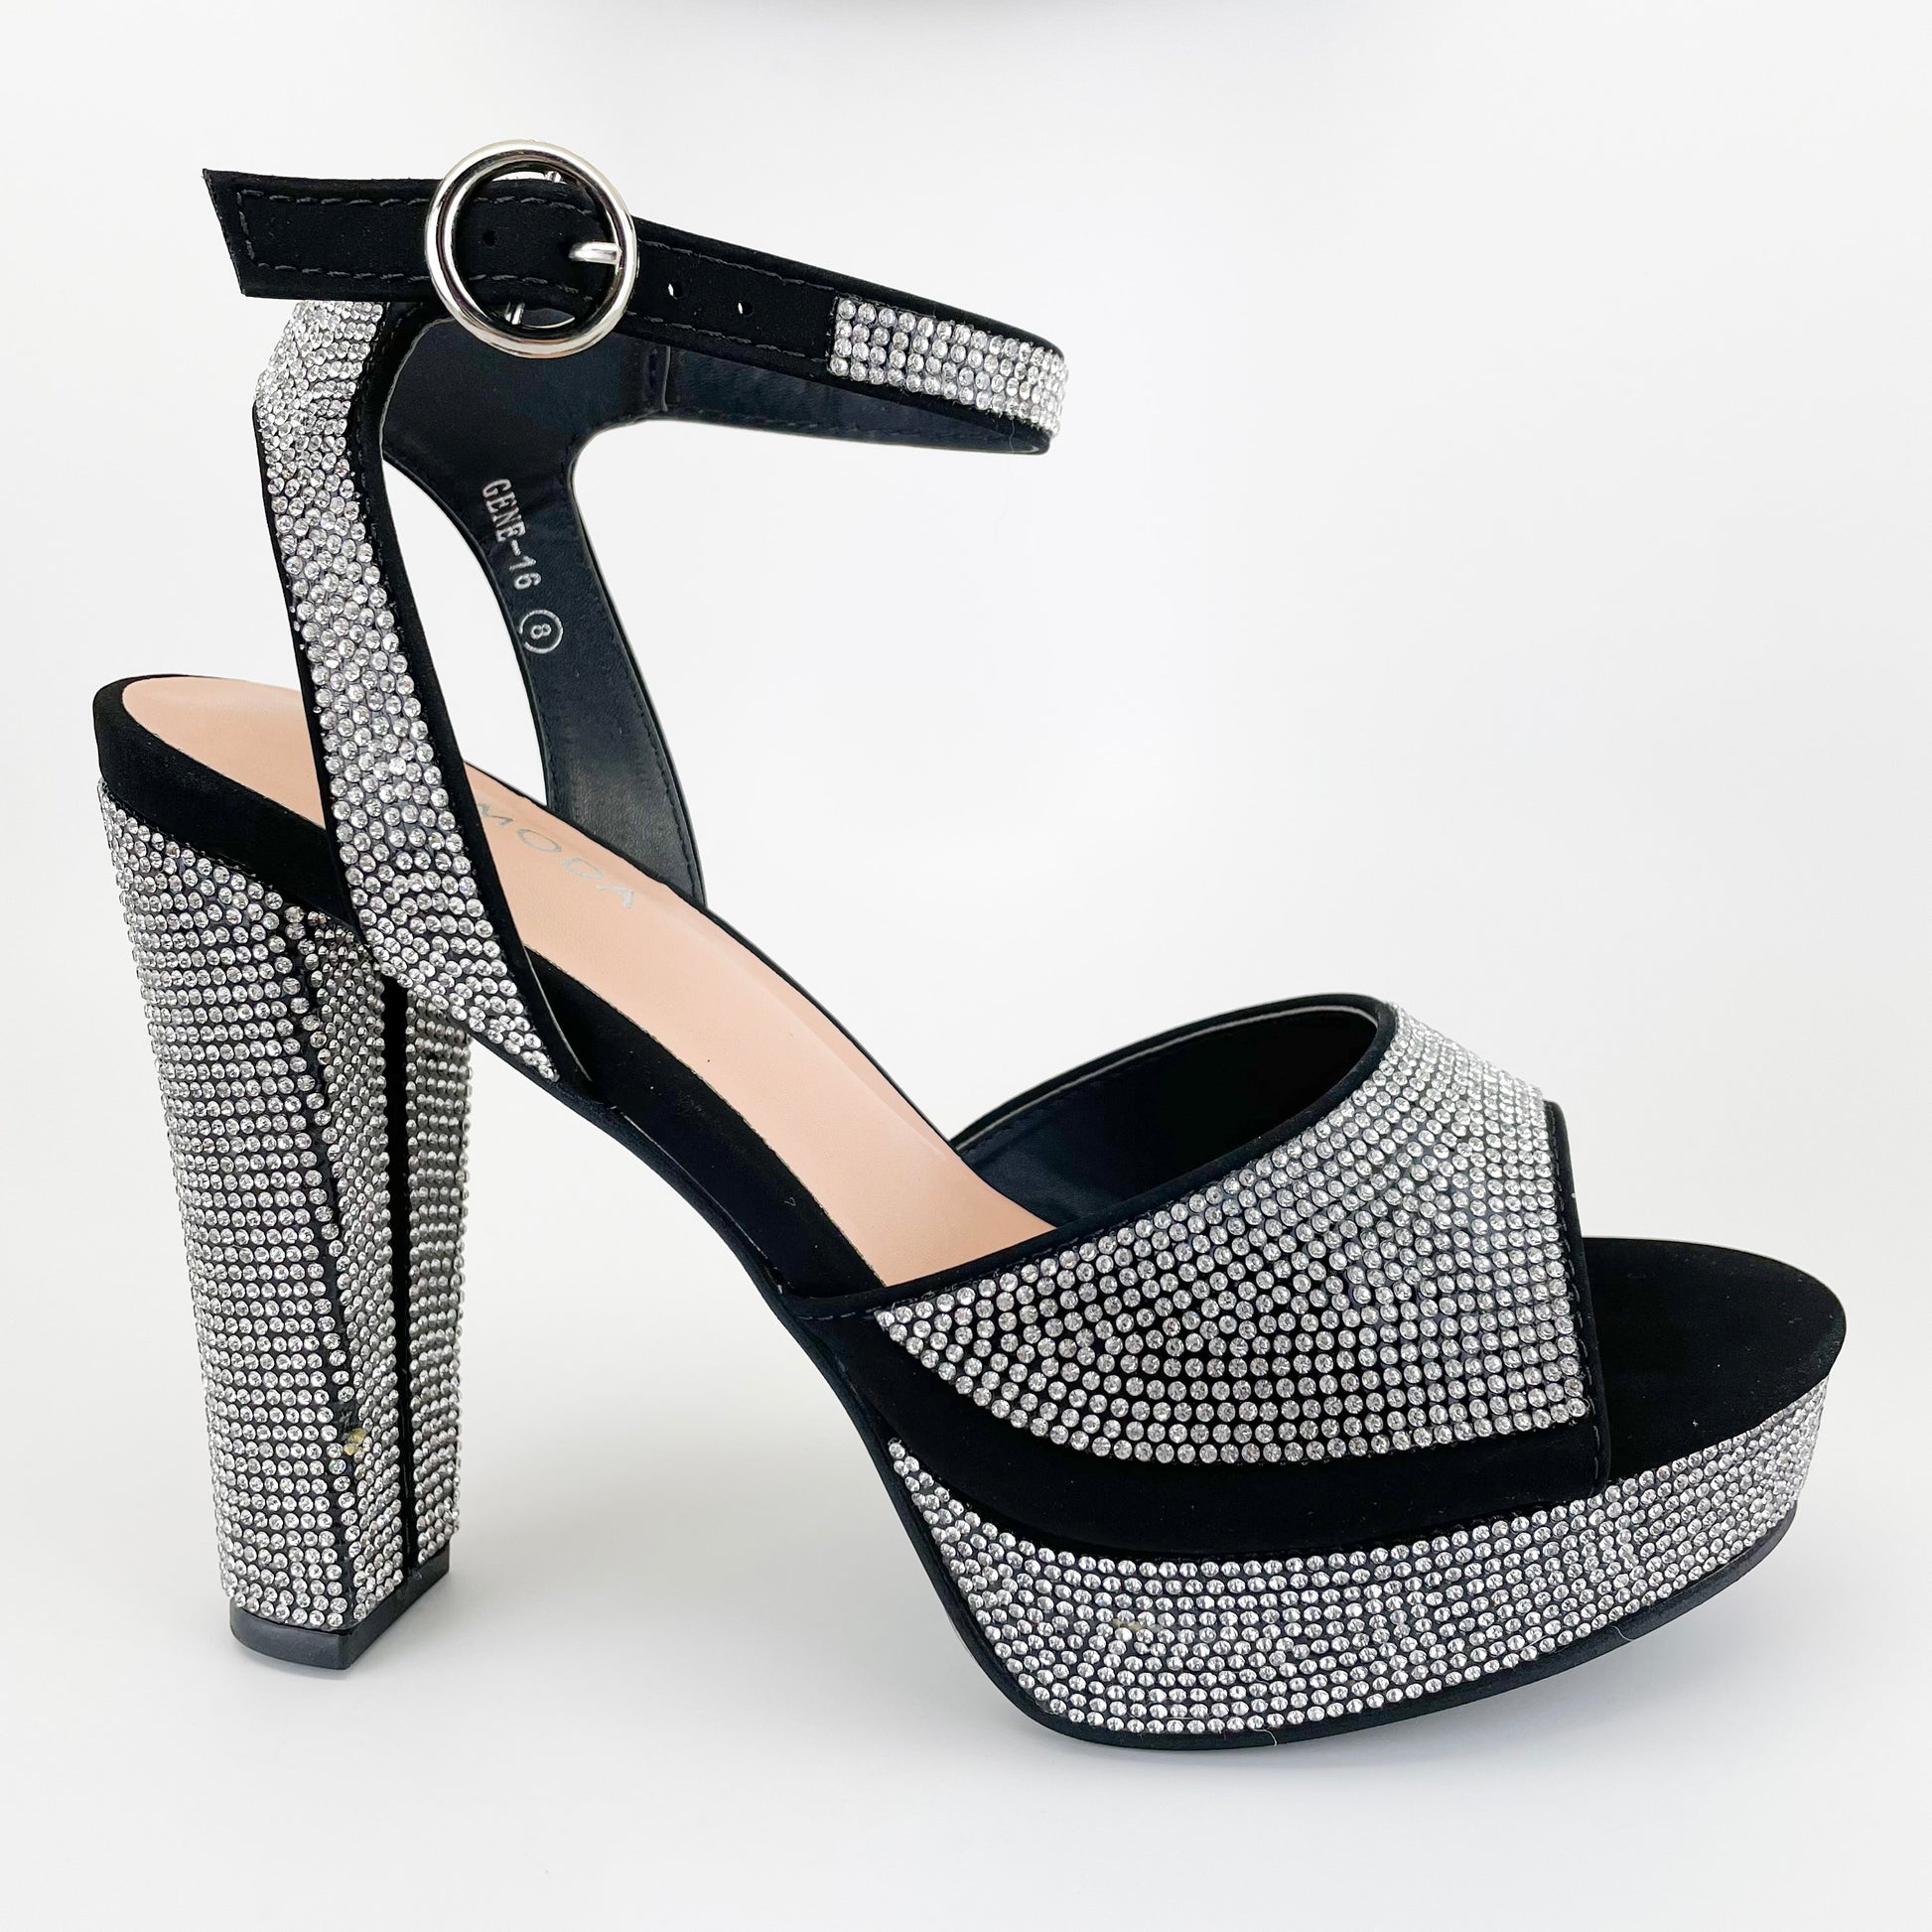 platform black rhinestone heels, black rhinestone heels ankle strap, black rhinestone block heels, black and silver rhinestone heels, black shoes with rhinestone heels